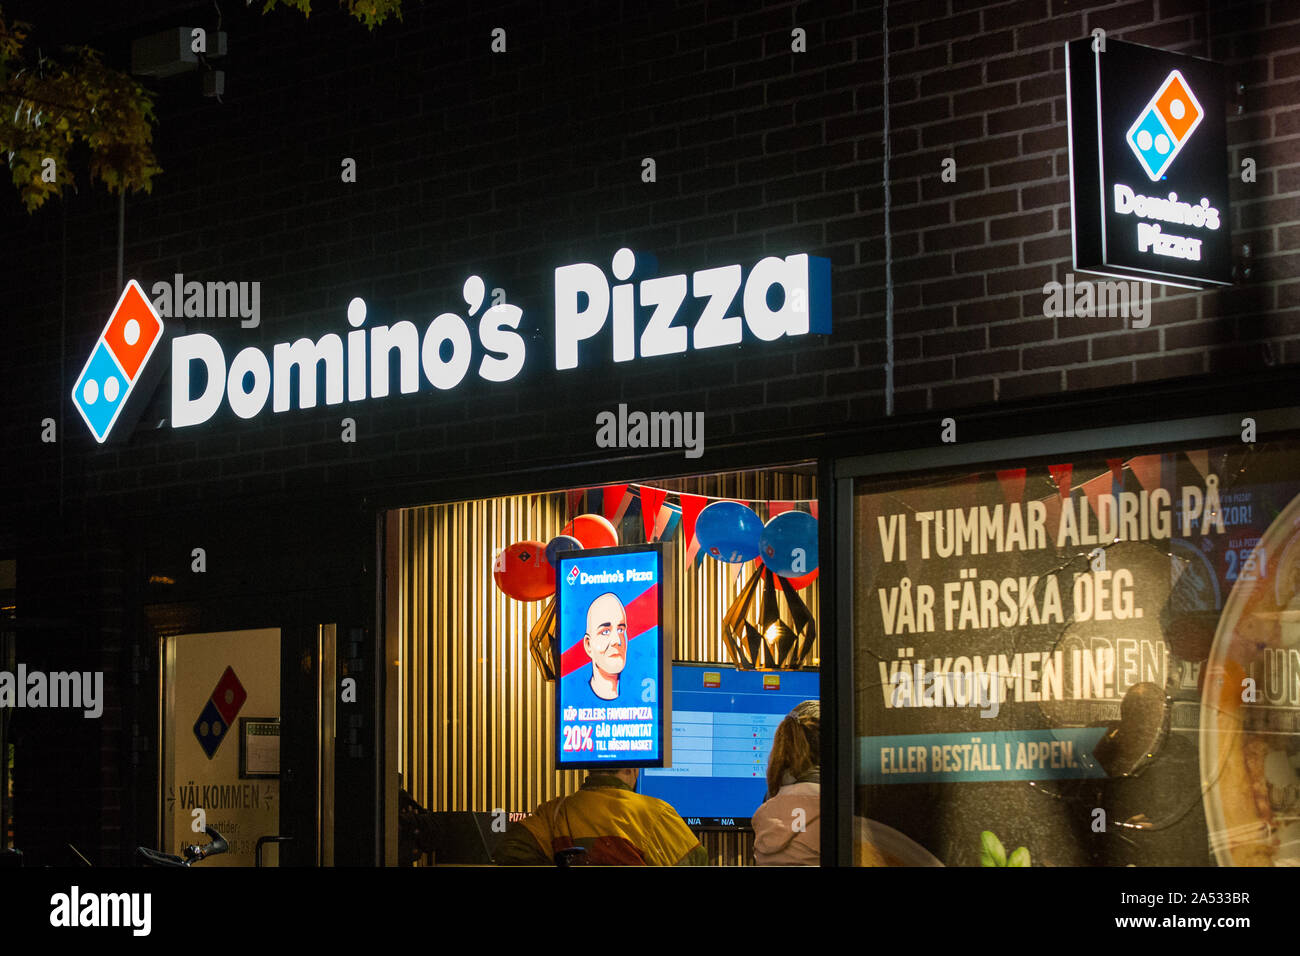 Amerikanische multinationale Pizza Restaurant kette Domino's Pizza in Göteborg. Stockfoto